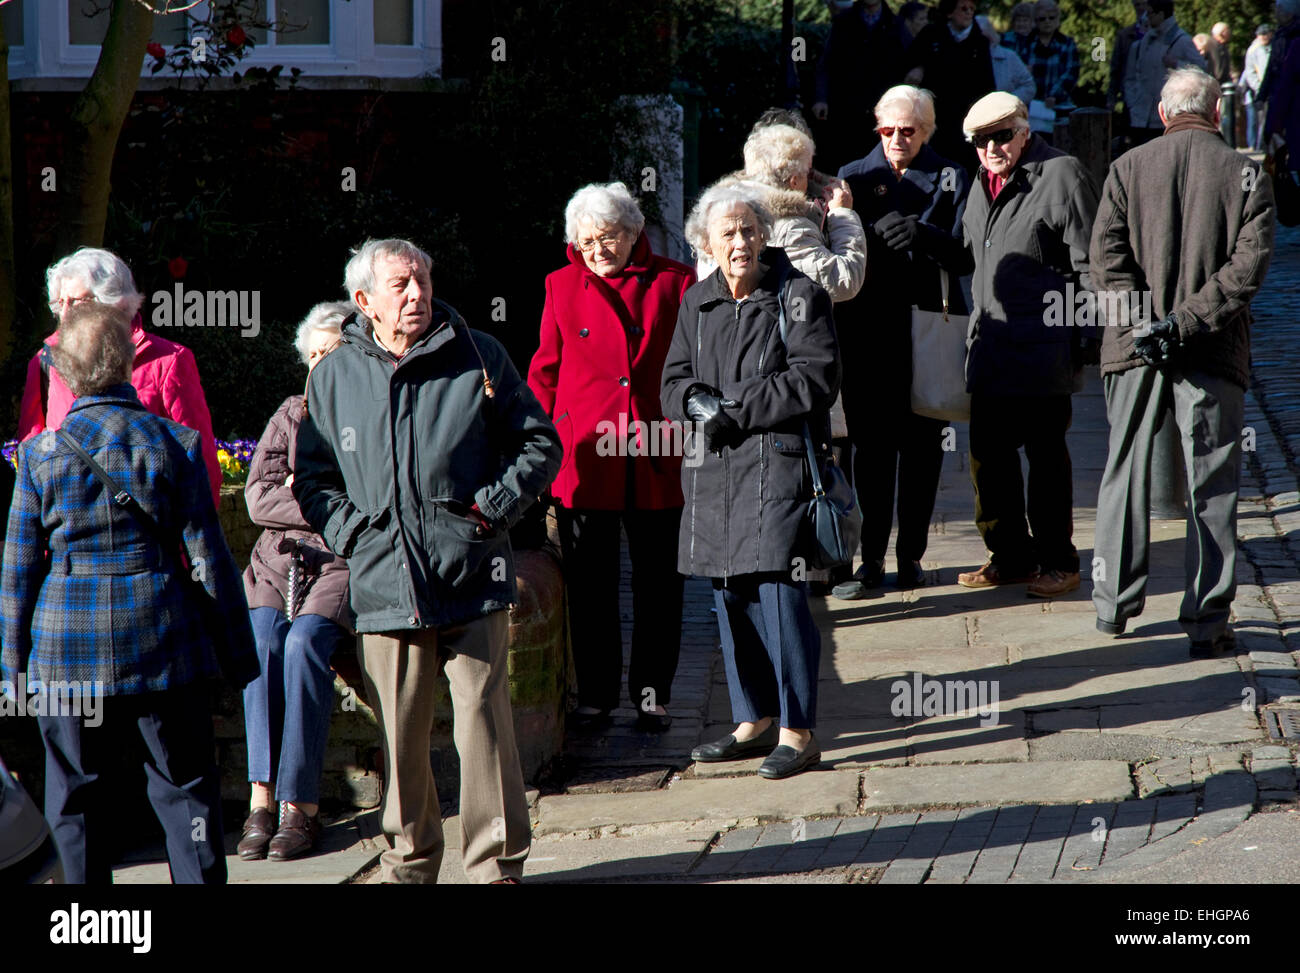 Group of older people, St Albans, Hertfordshire, England, UK Stock Photo